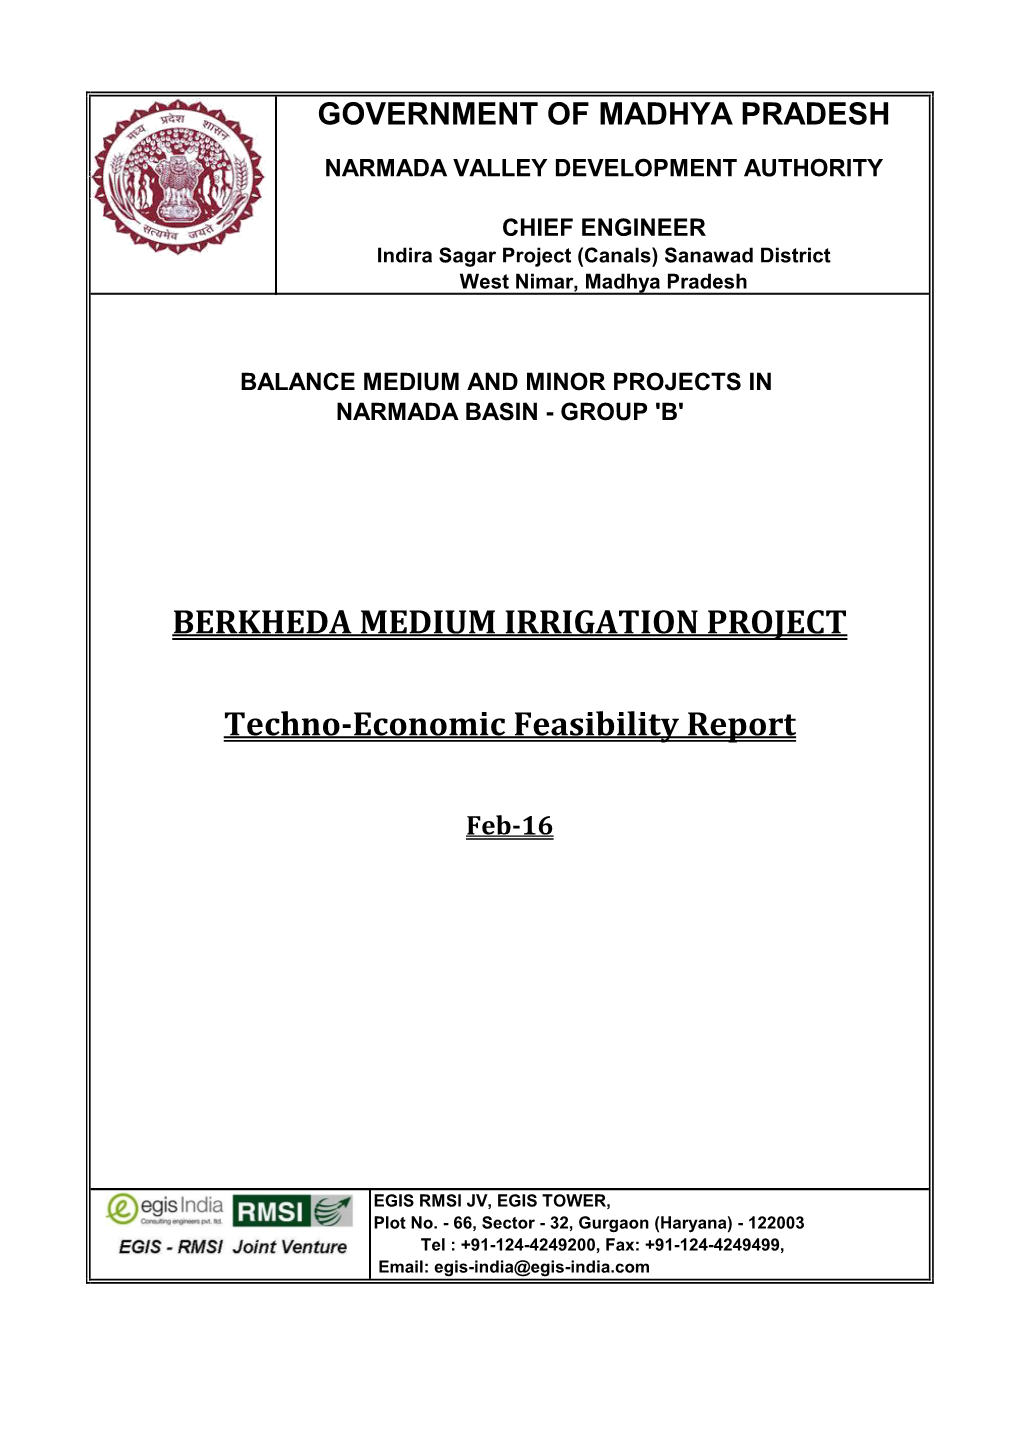 BERKHEDA MEDIUM IRRIGATION PROJECT Techno-Economic Feasibility Report